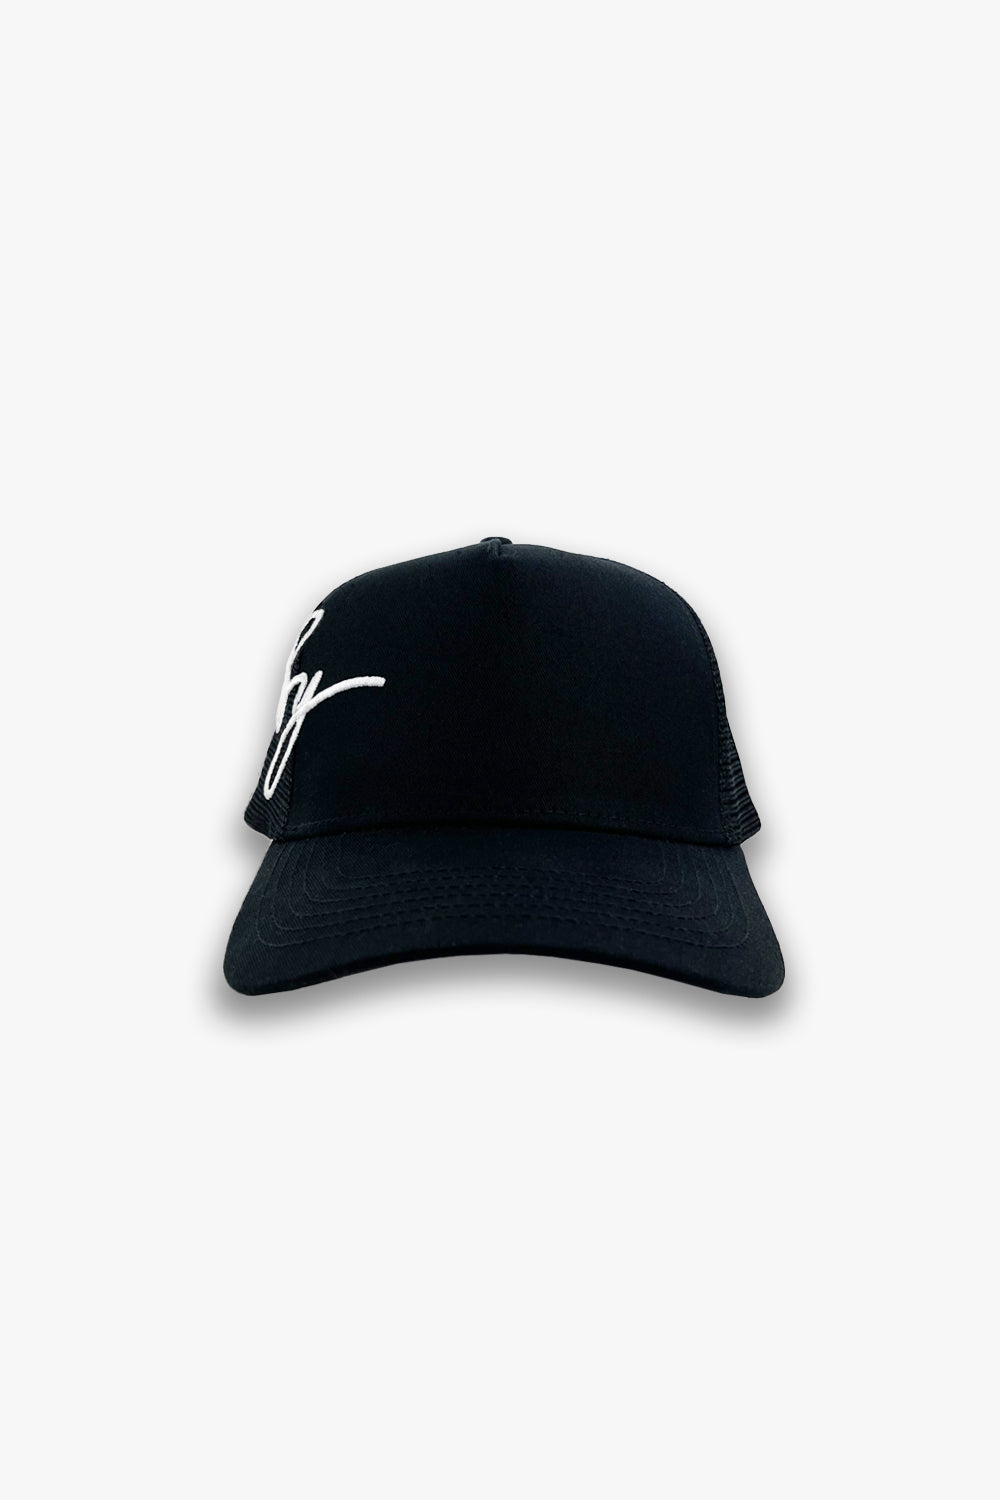 black designer trucker hat front view 